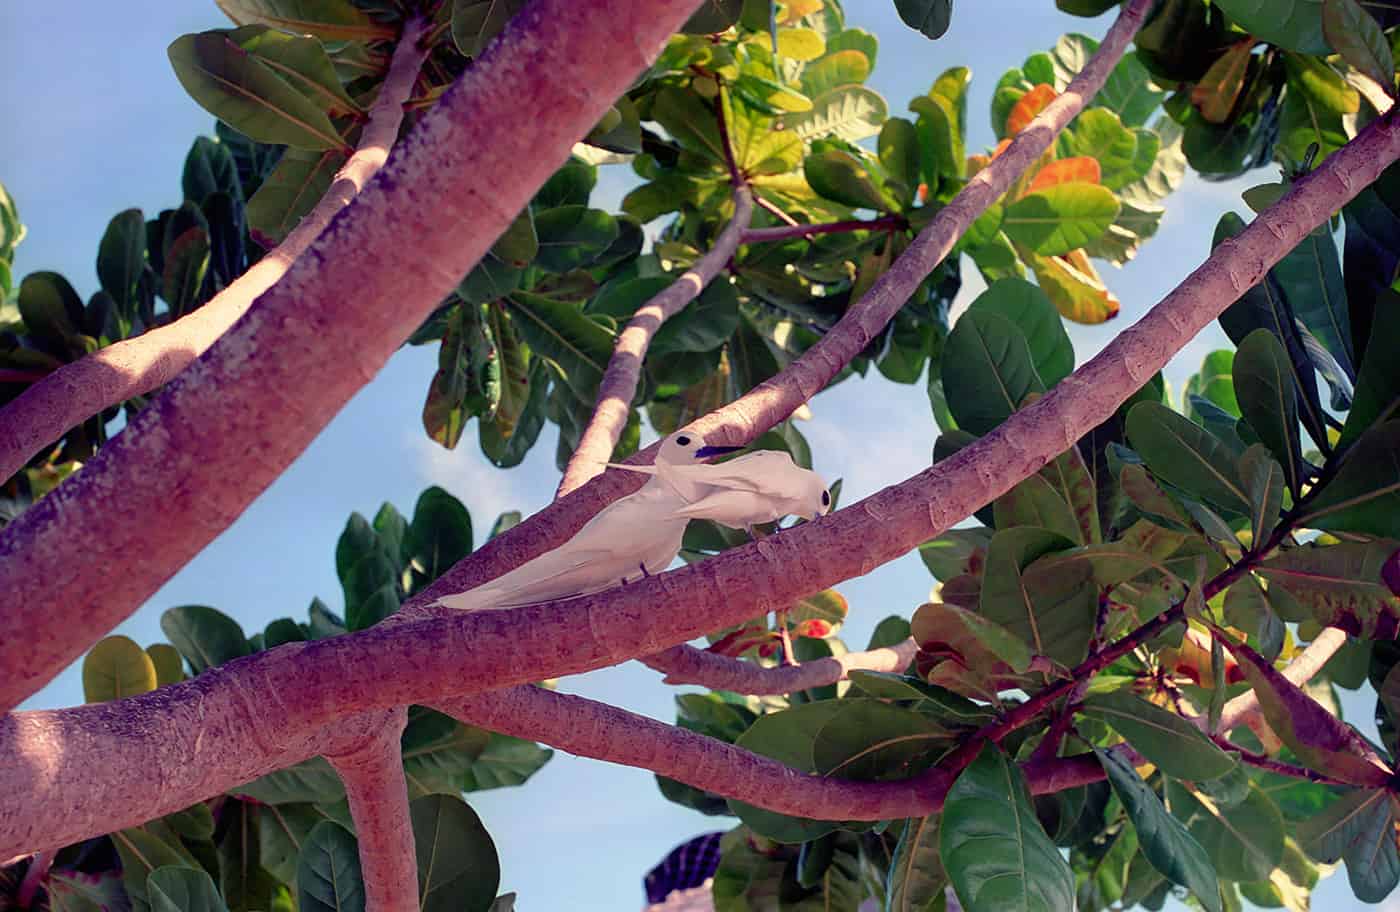 Seychellen Bird Island